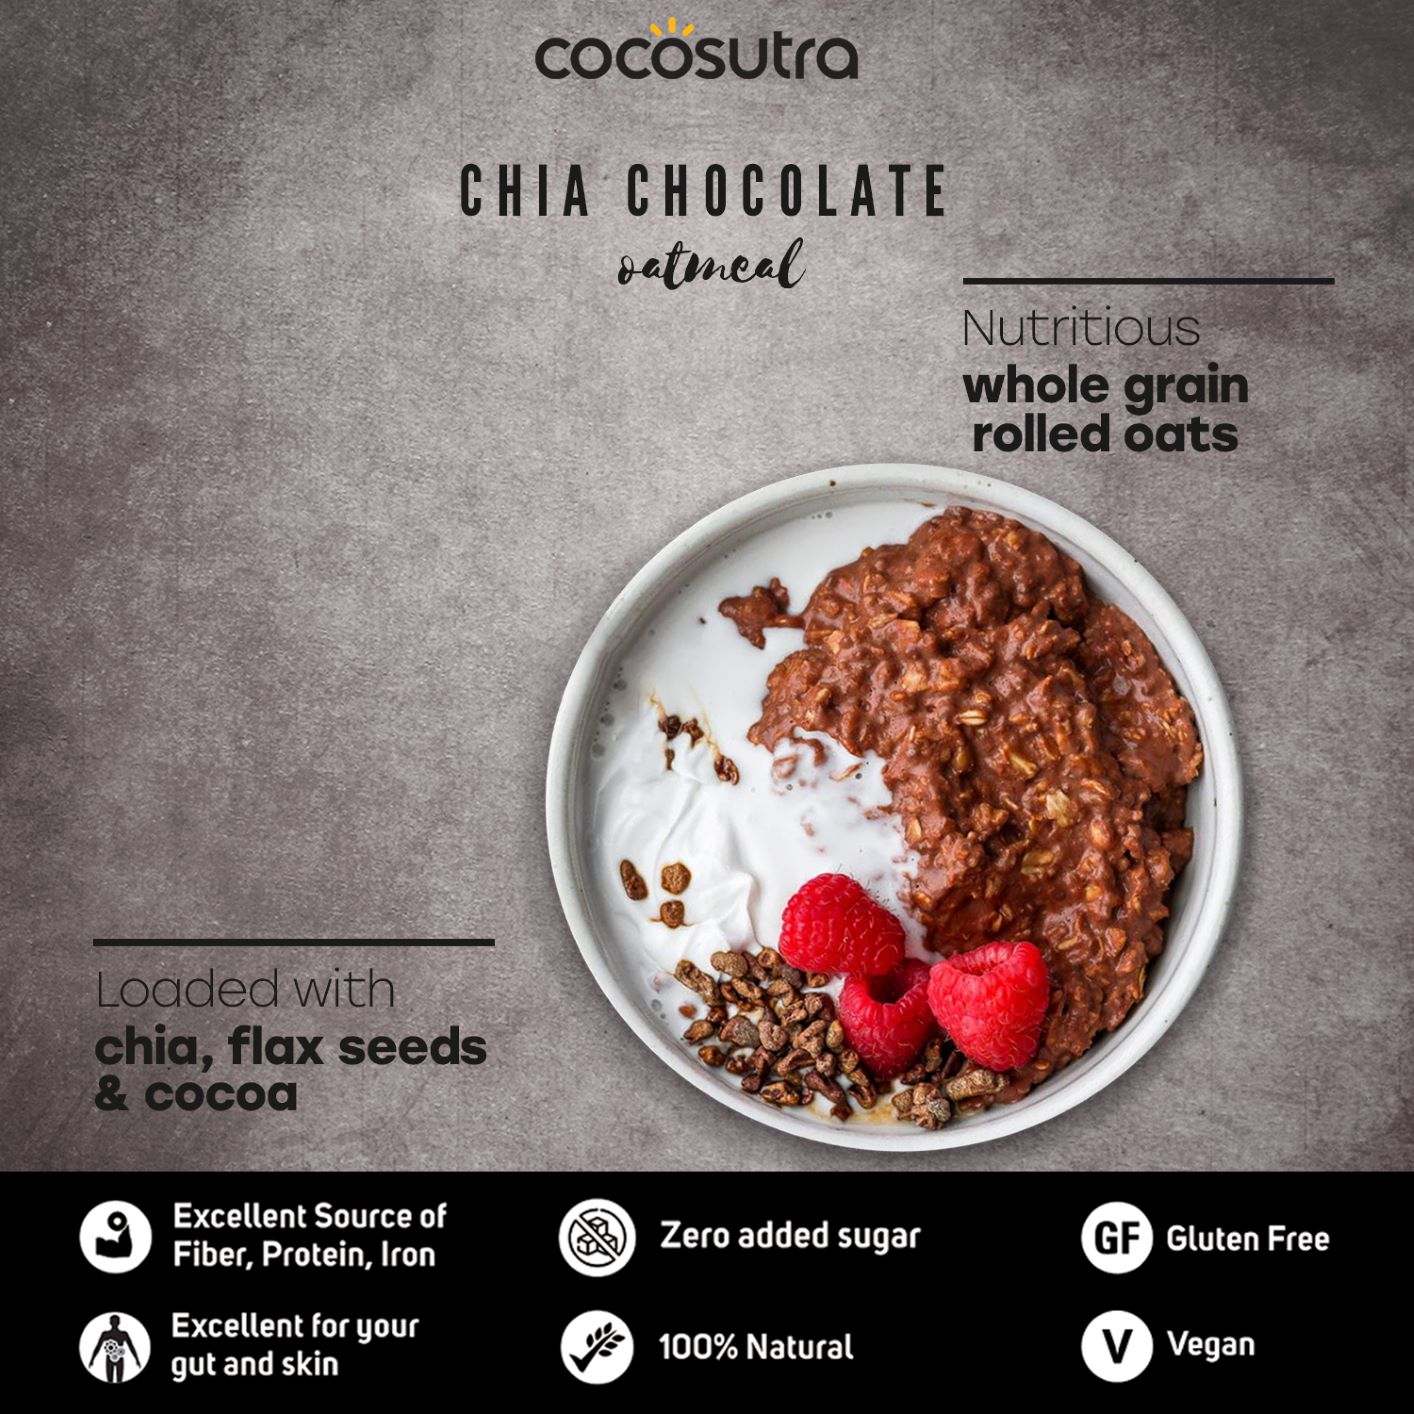 Chia Chocolate Oatmeal Benefits